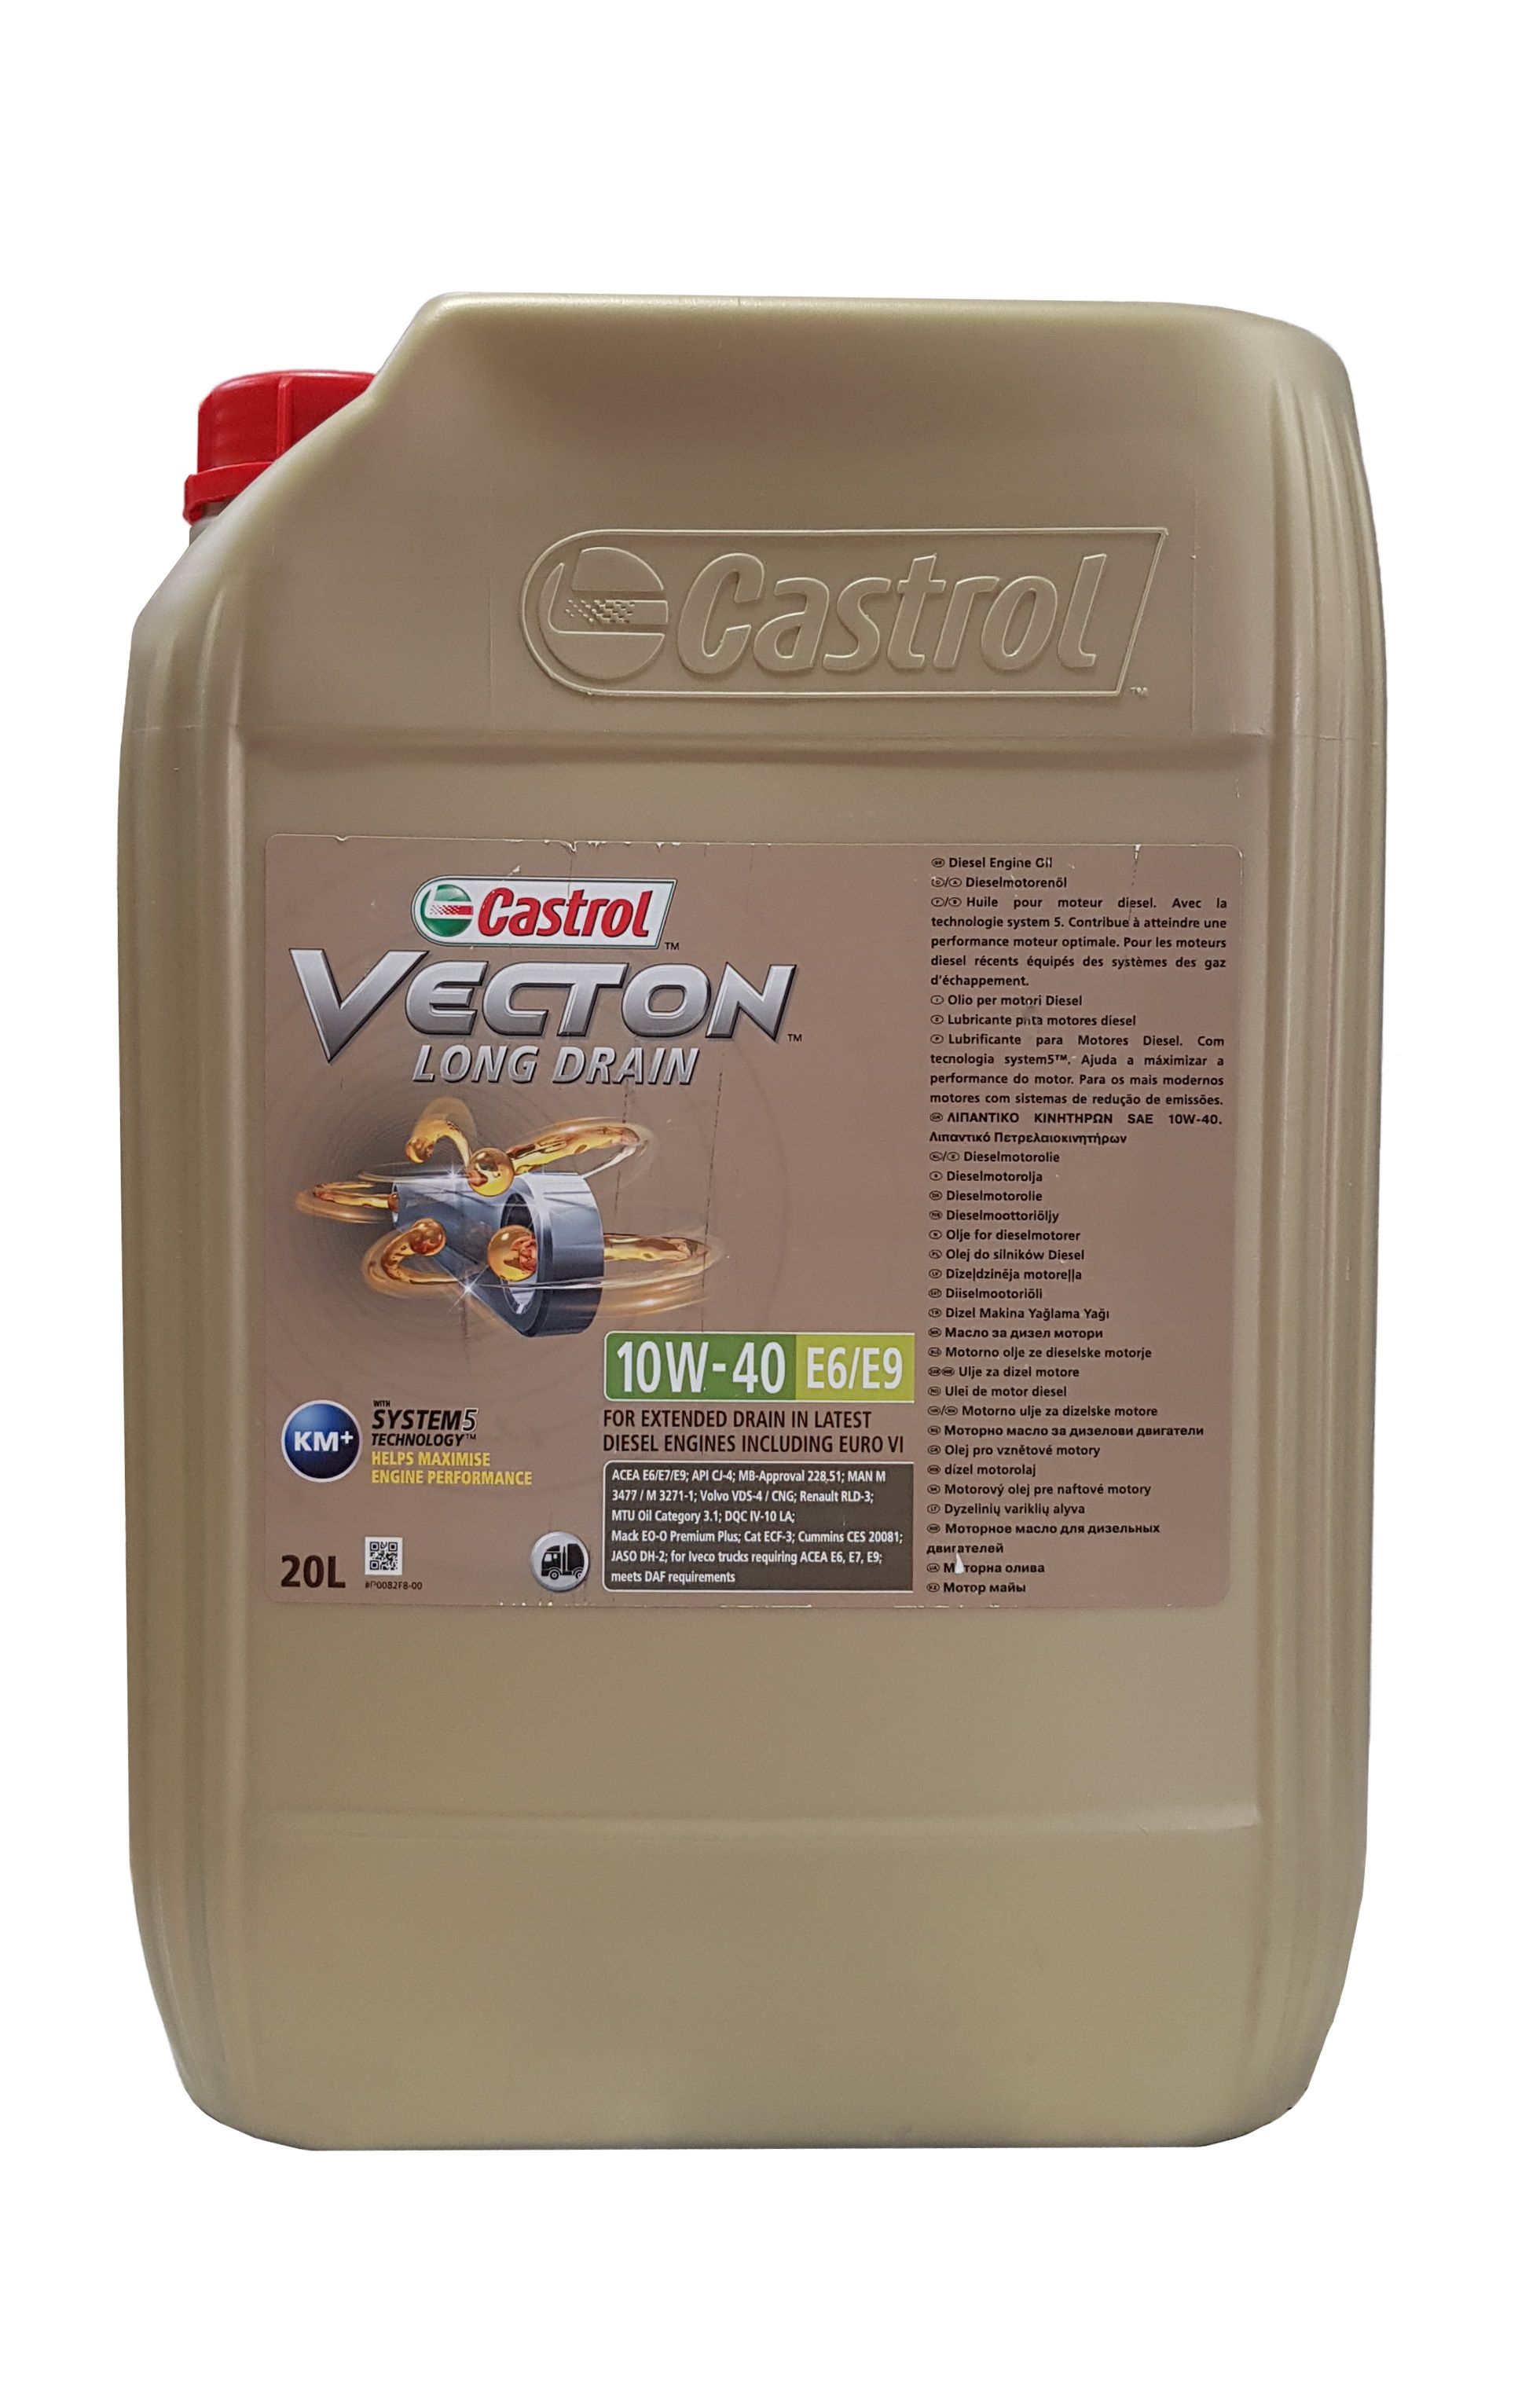 Castrol Vecton Long Drain 10W-40 E6/E9 20 Liter